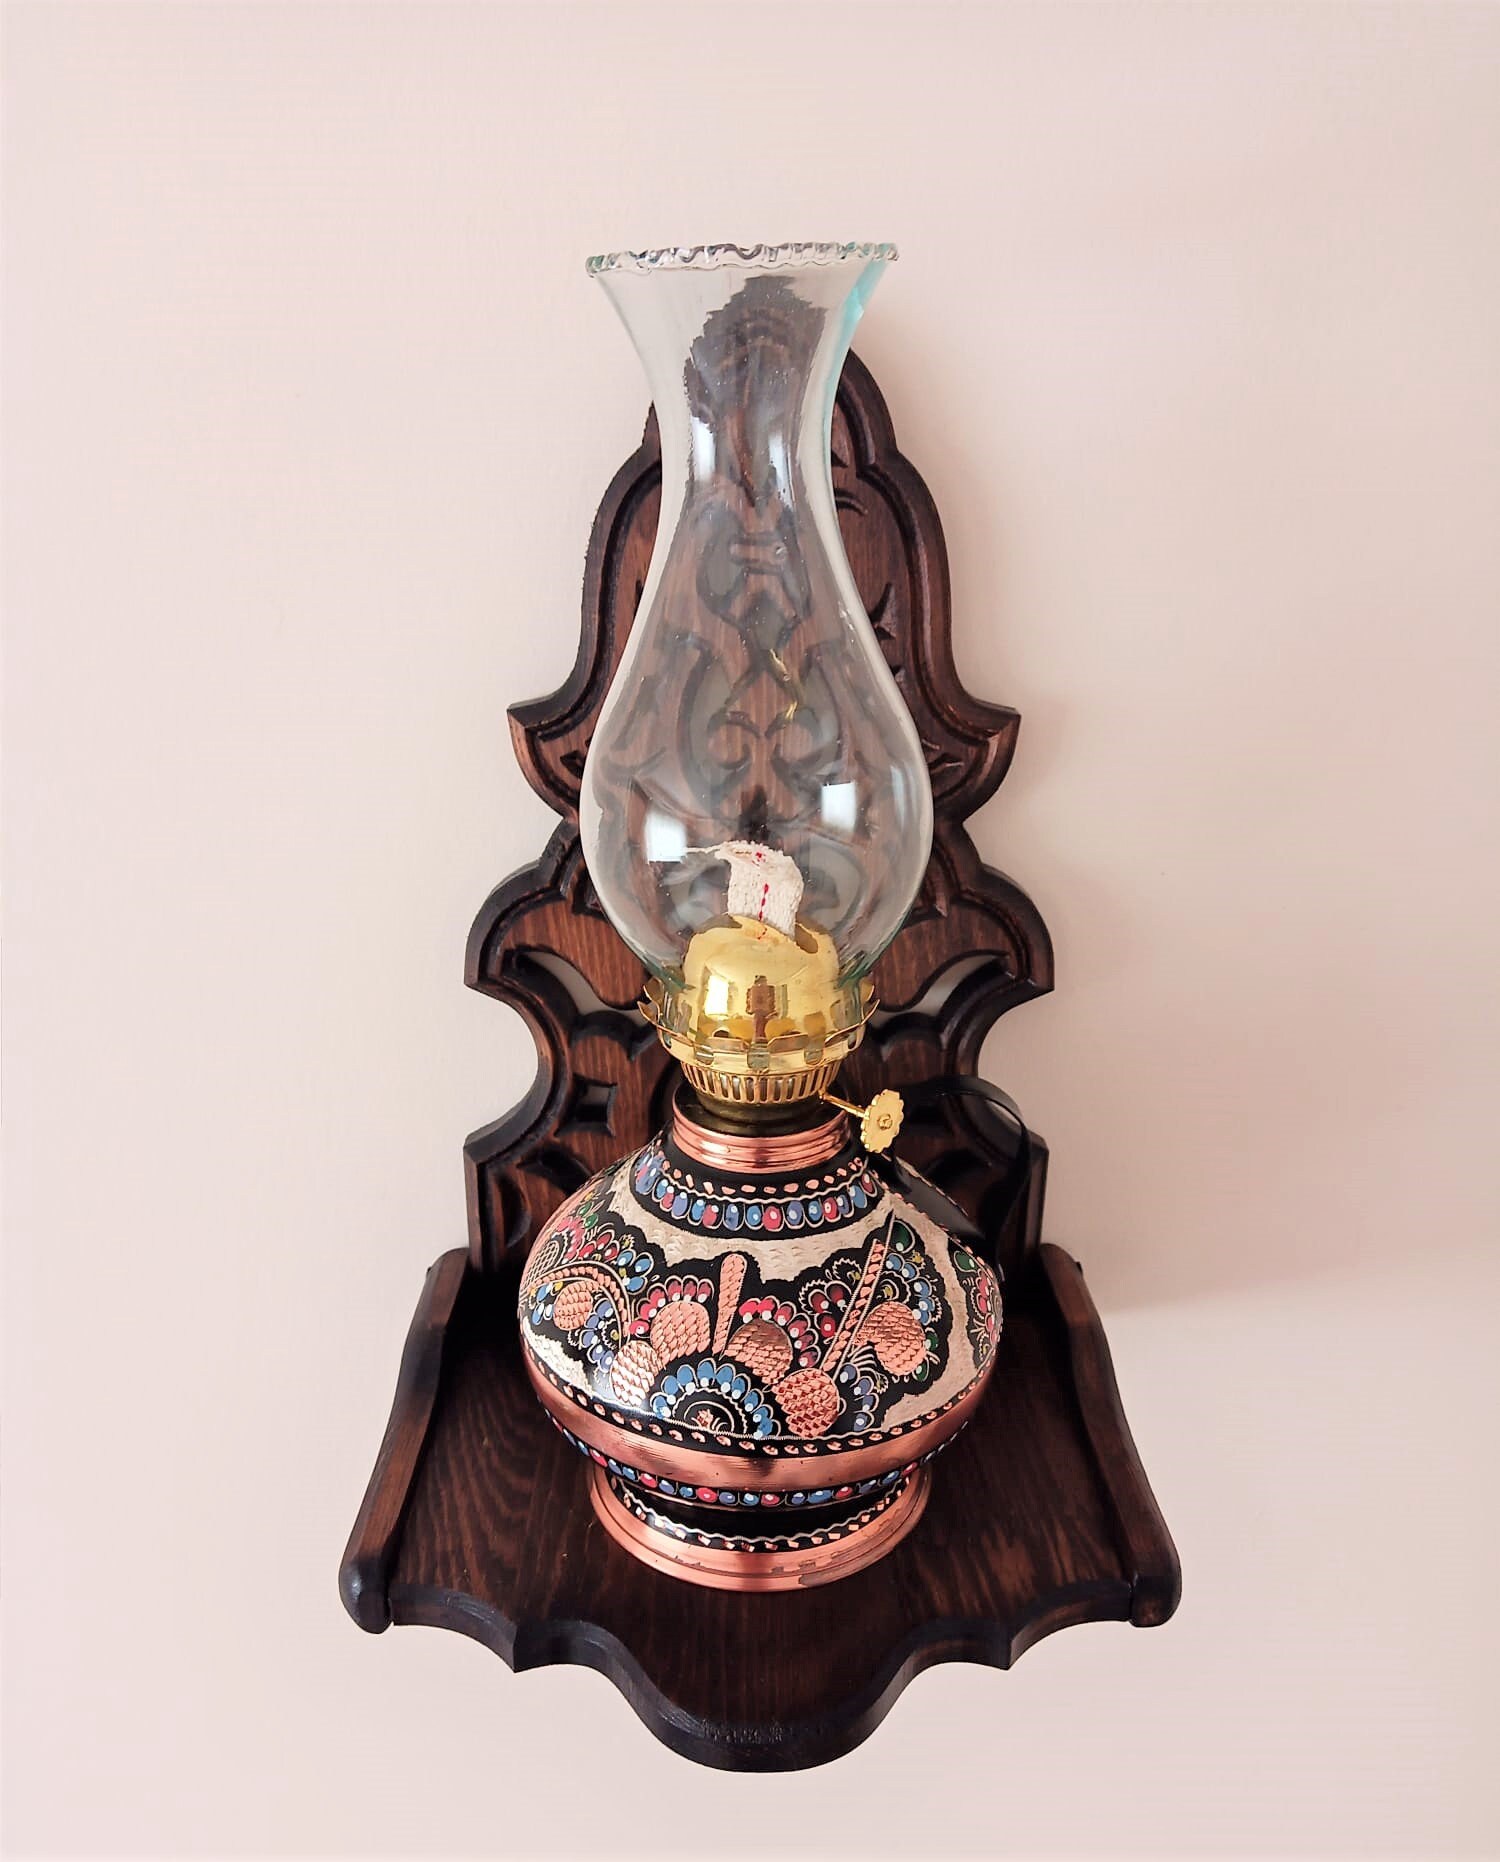 Copper Kerosene Lantern, Oil Lamp, Decorative Desk Lamp, Paraffin Oil Lamp, Wick  Lamp, Kerosene Lamp, Turkish Gas Lamp, Aladdin Oil Lamp 